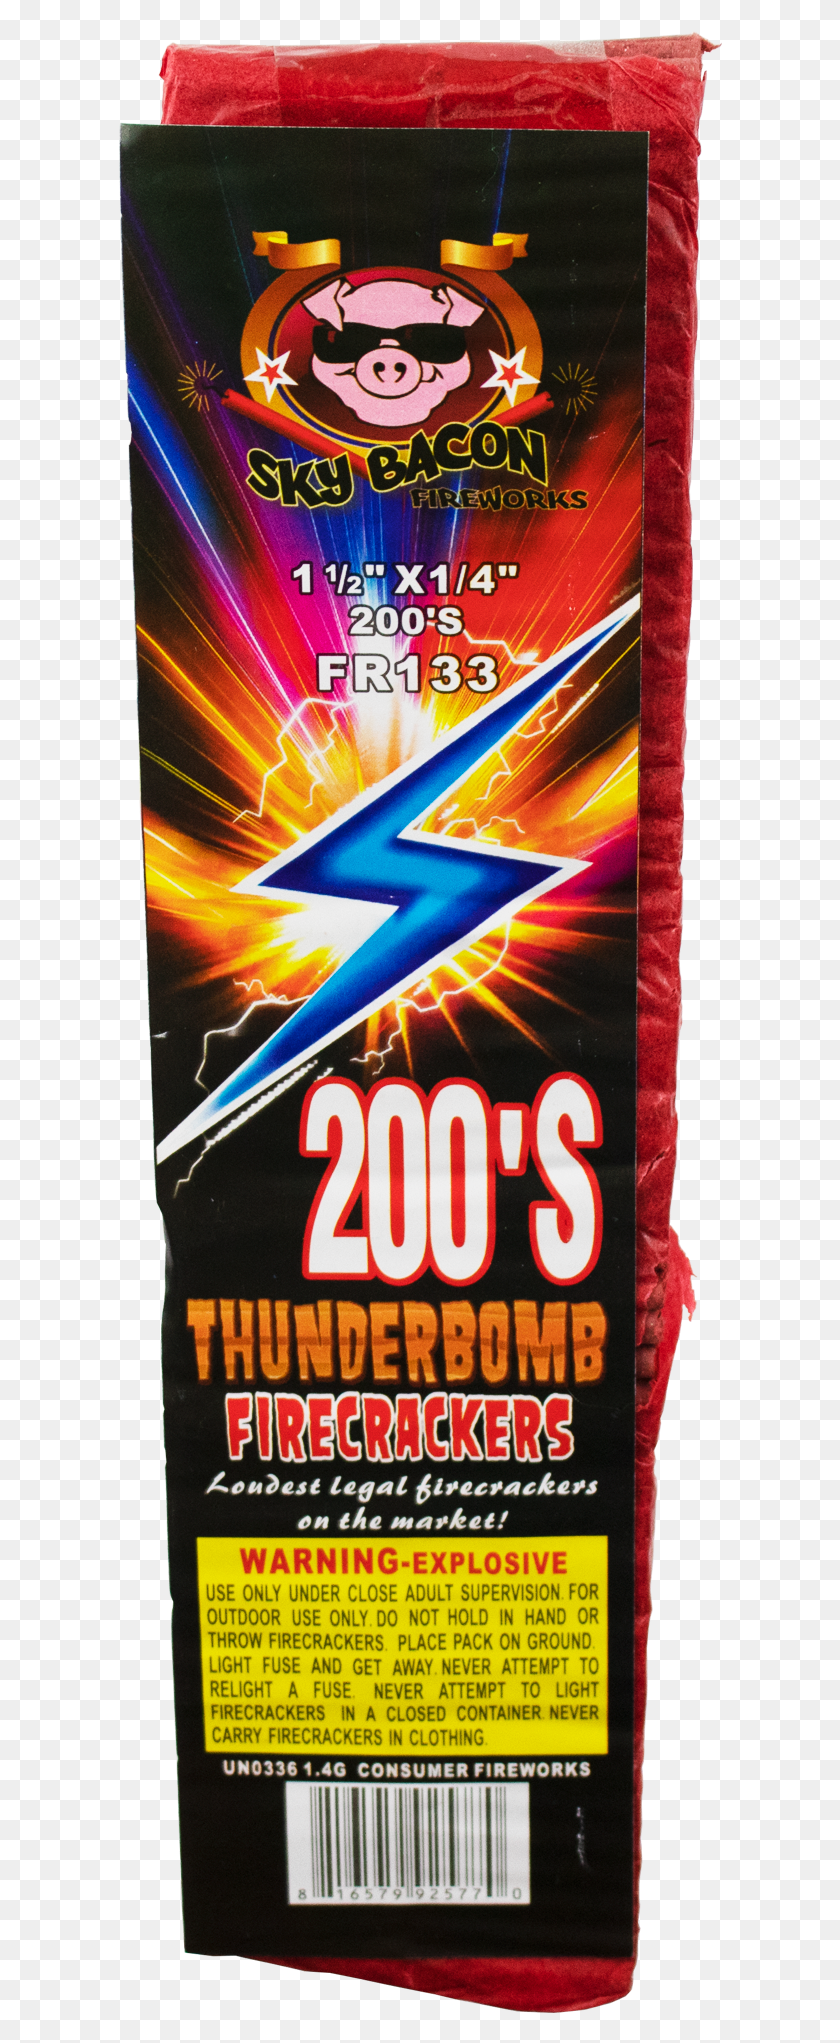 604x1983 Descargar Png Thunderbomb Firecrackers 200S Software Multimedia, Poster, Publicidad, Flyer Hd Png